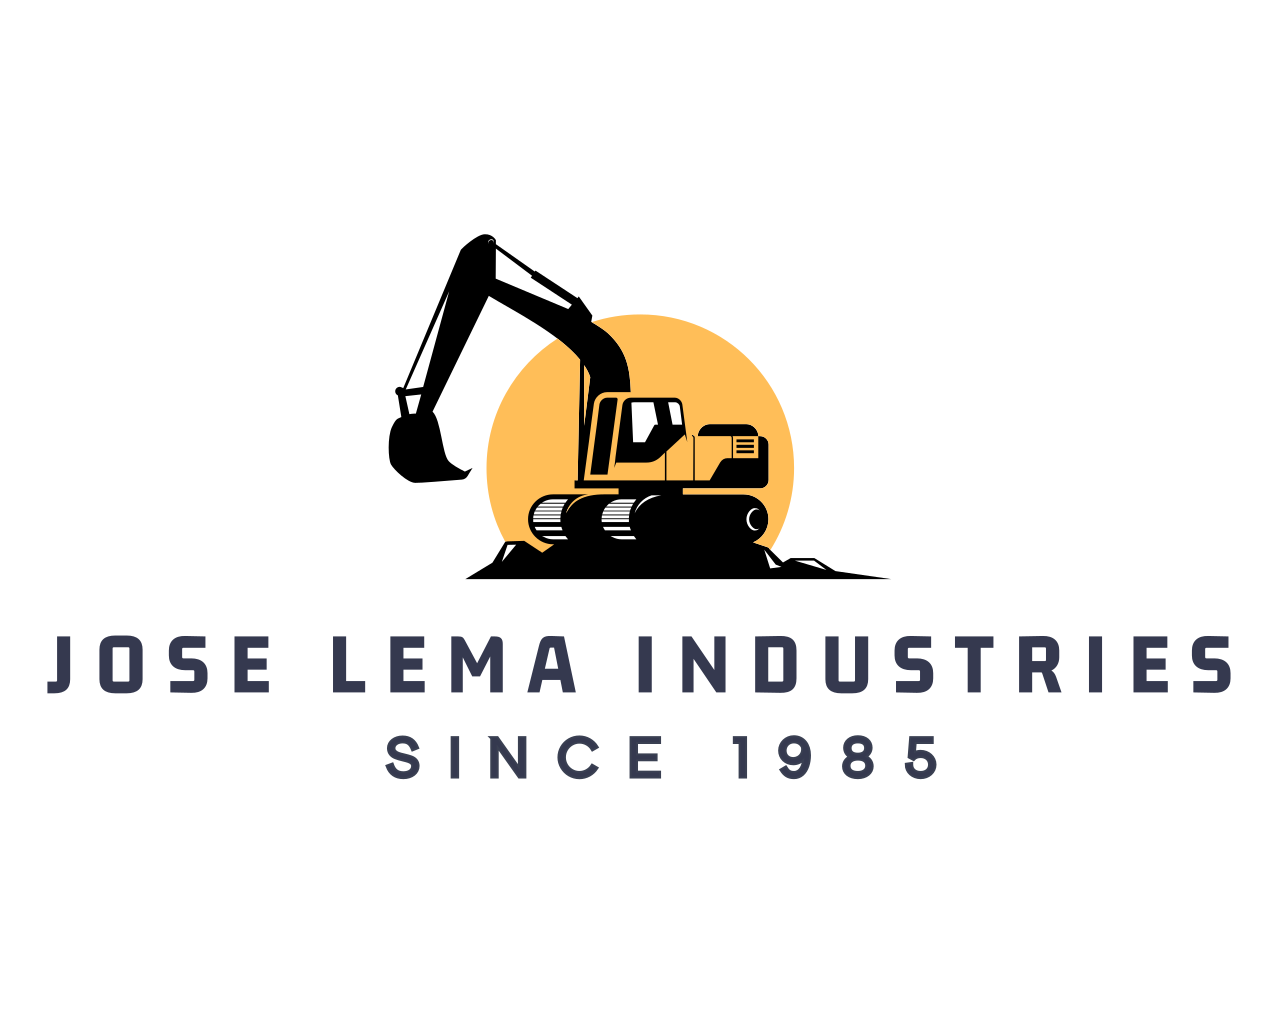 Jose Lema Industries